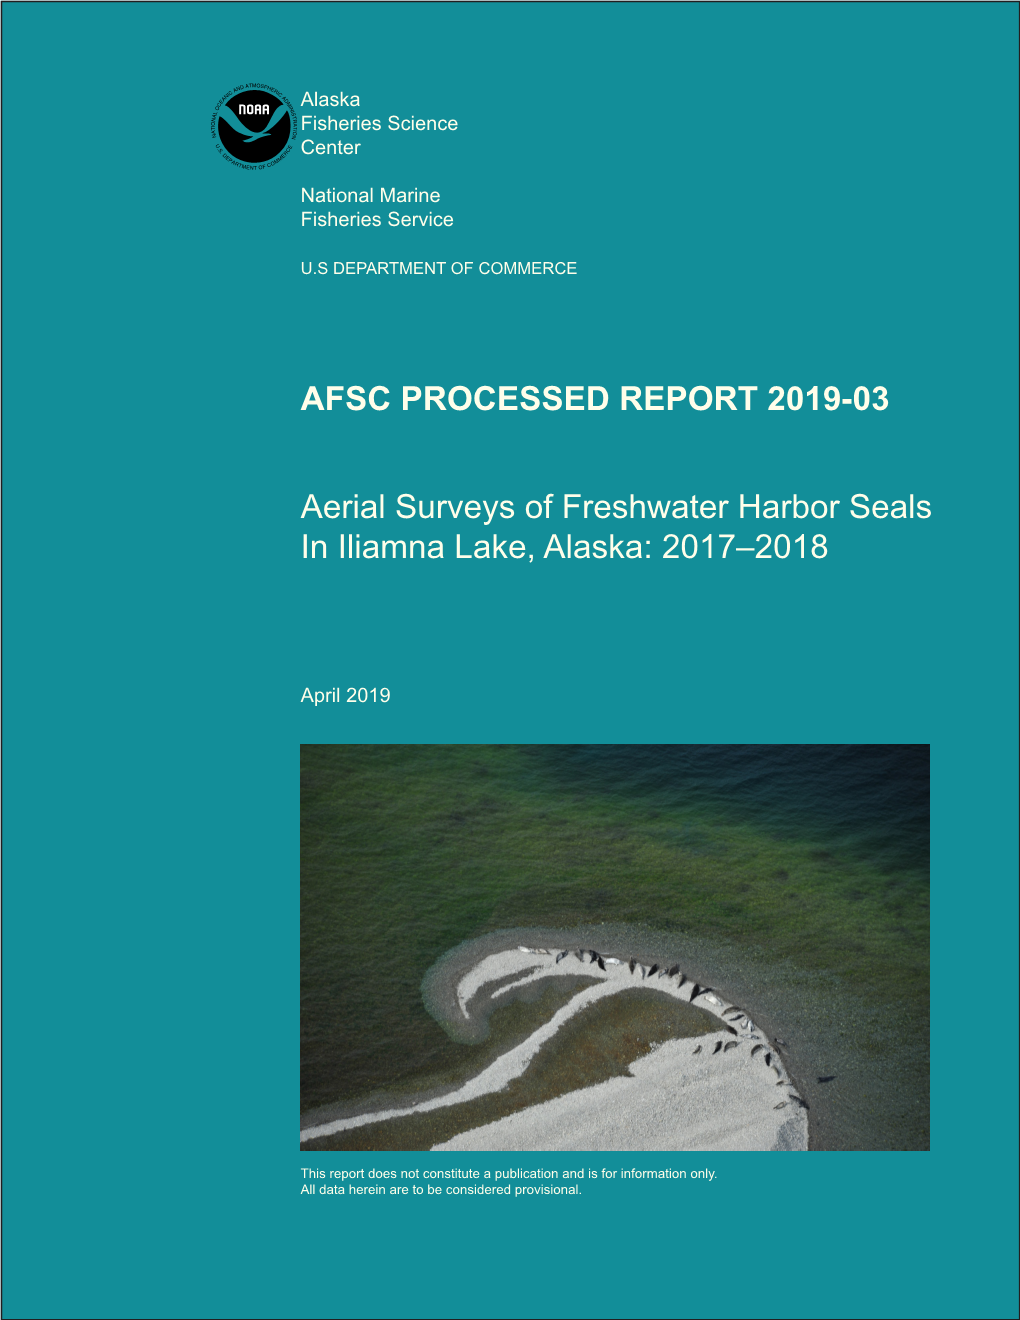 Aerial Surveys of Freshwater Harbor Seals in Iliamna Lake, Alaska: 2017–2018